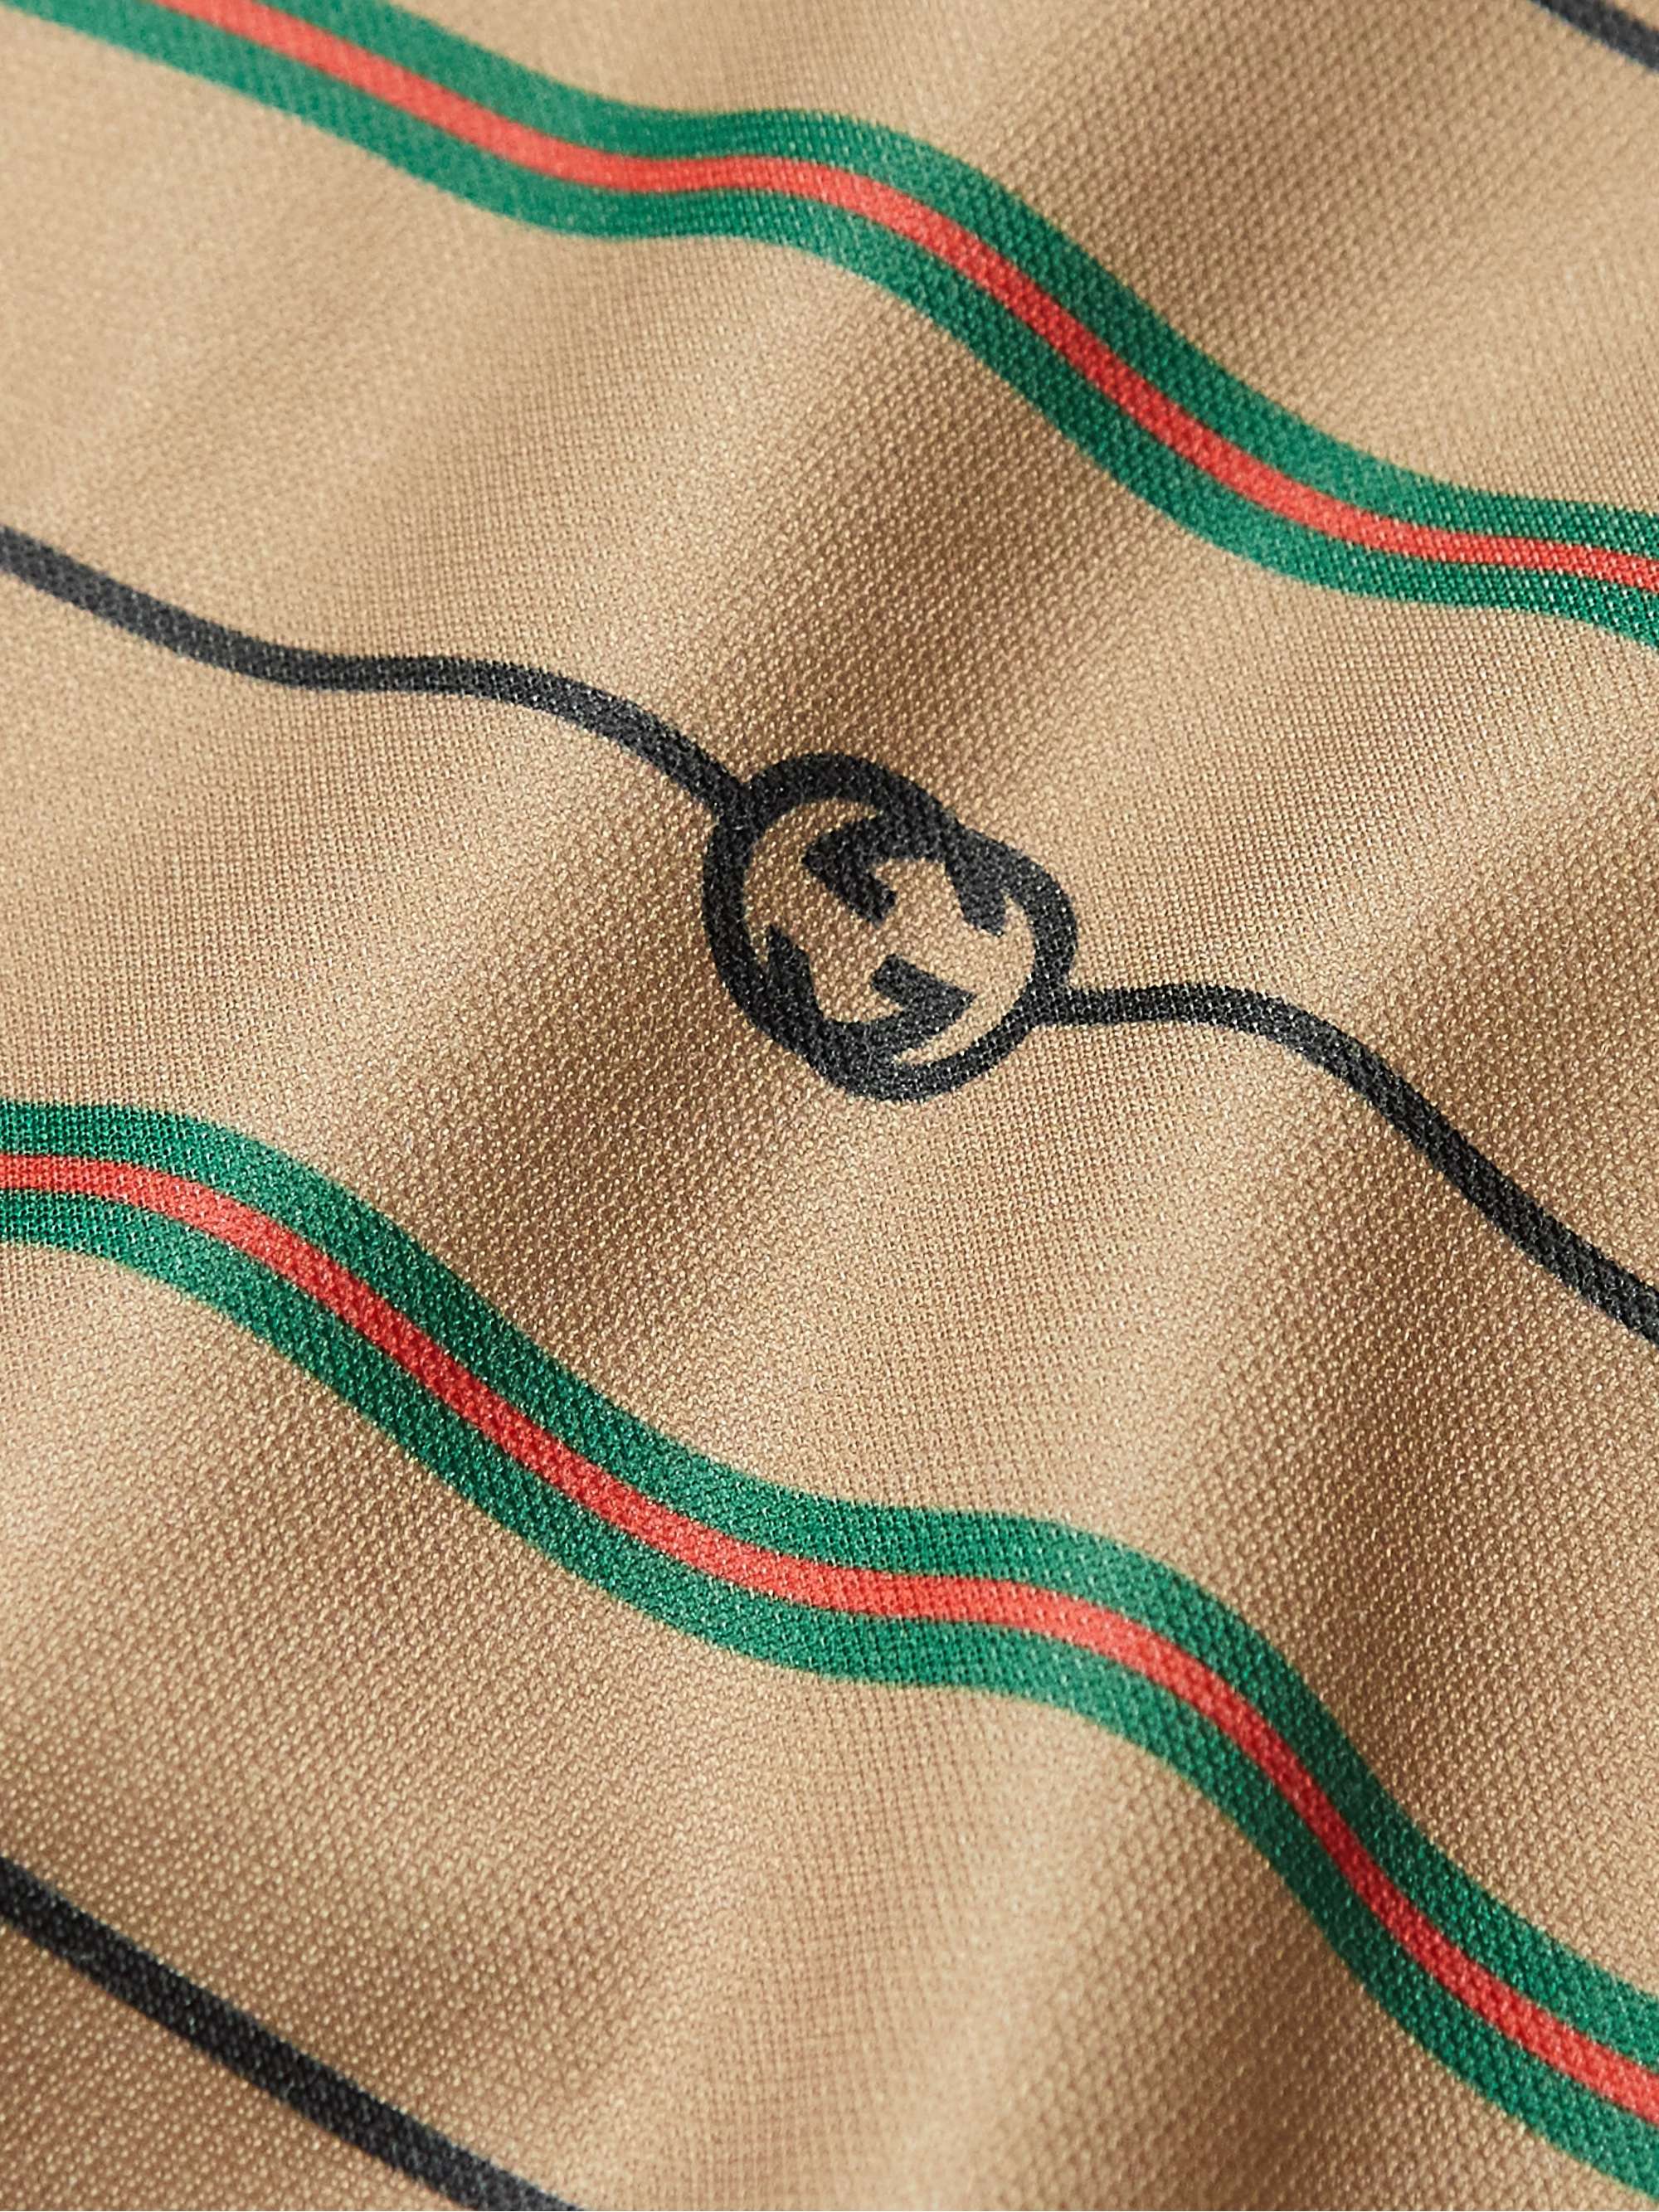 GUCCI Logo-Print Striped Piqué Half-Zip Sweatshirt